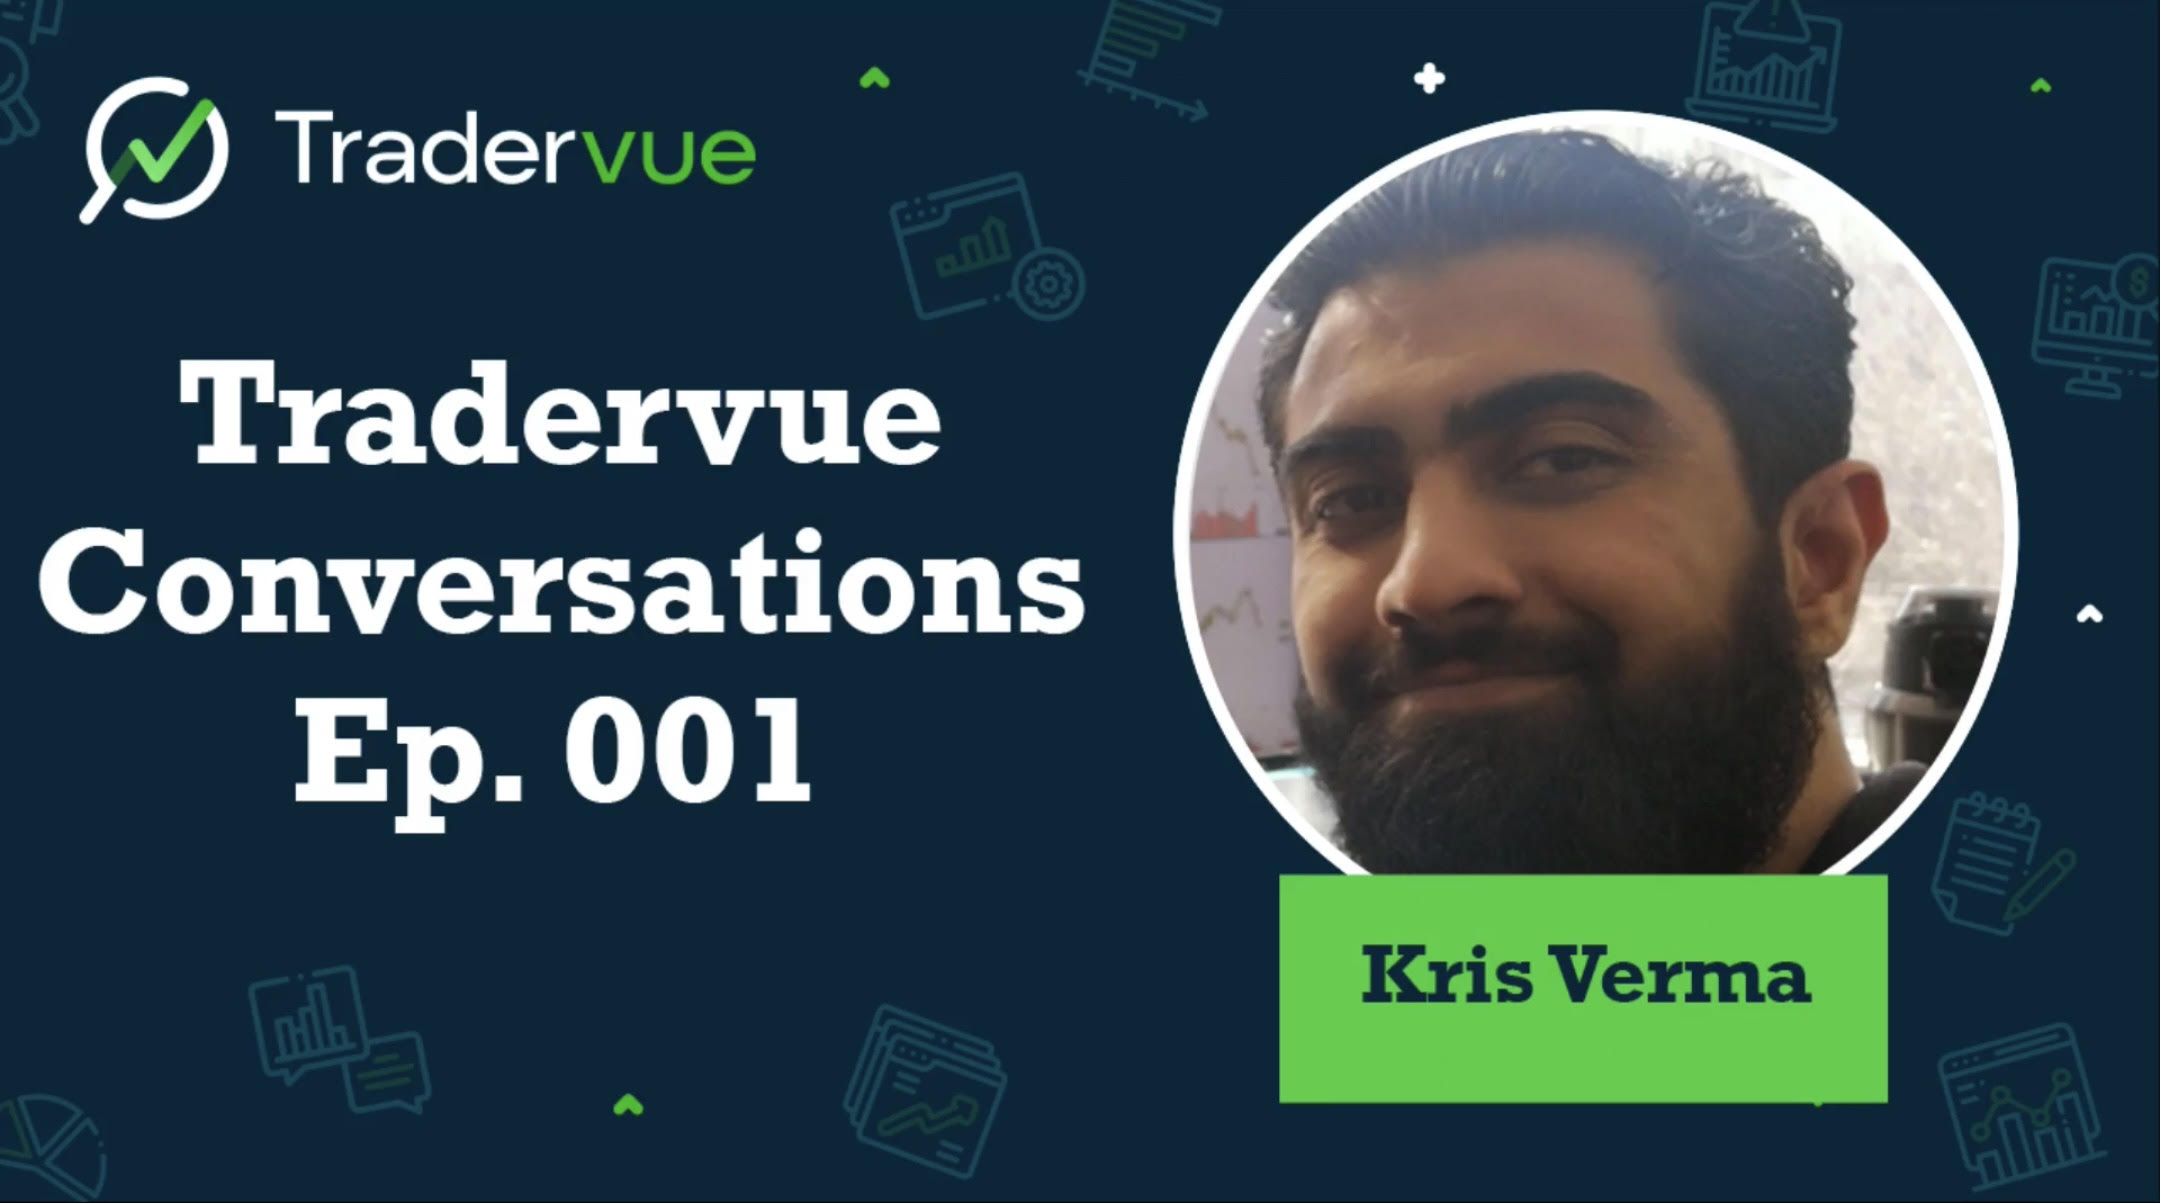 Tradervue Conversations Episode 1 - Kris Verma